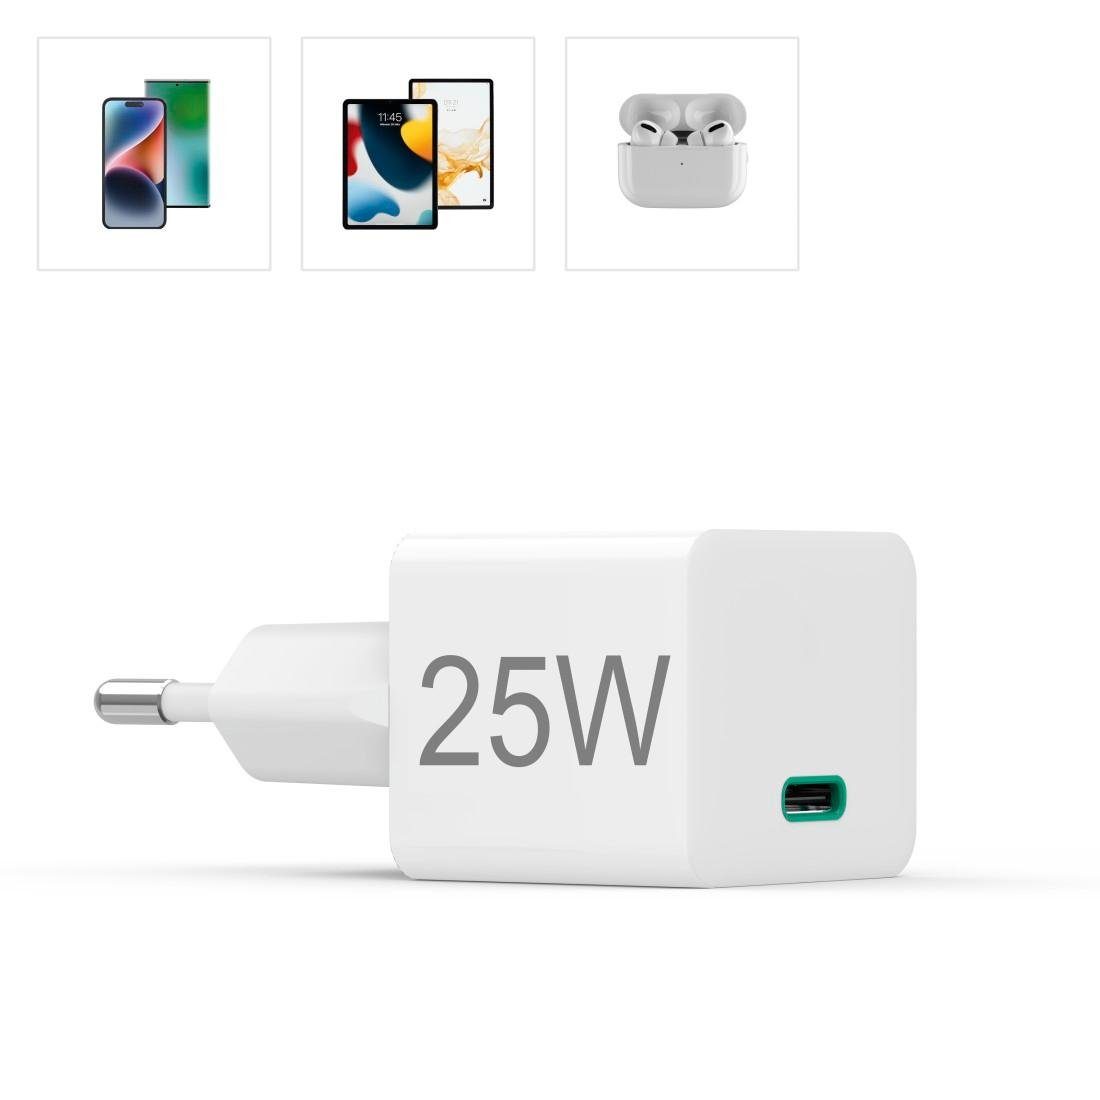 Quick Schnellladegerät mit u. Charge weiß Delivery USB-Ladegerät 20 Power Watt, Ladegerät Hama